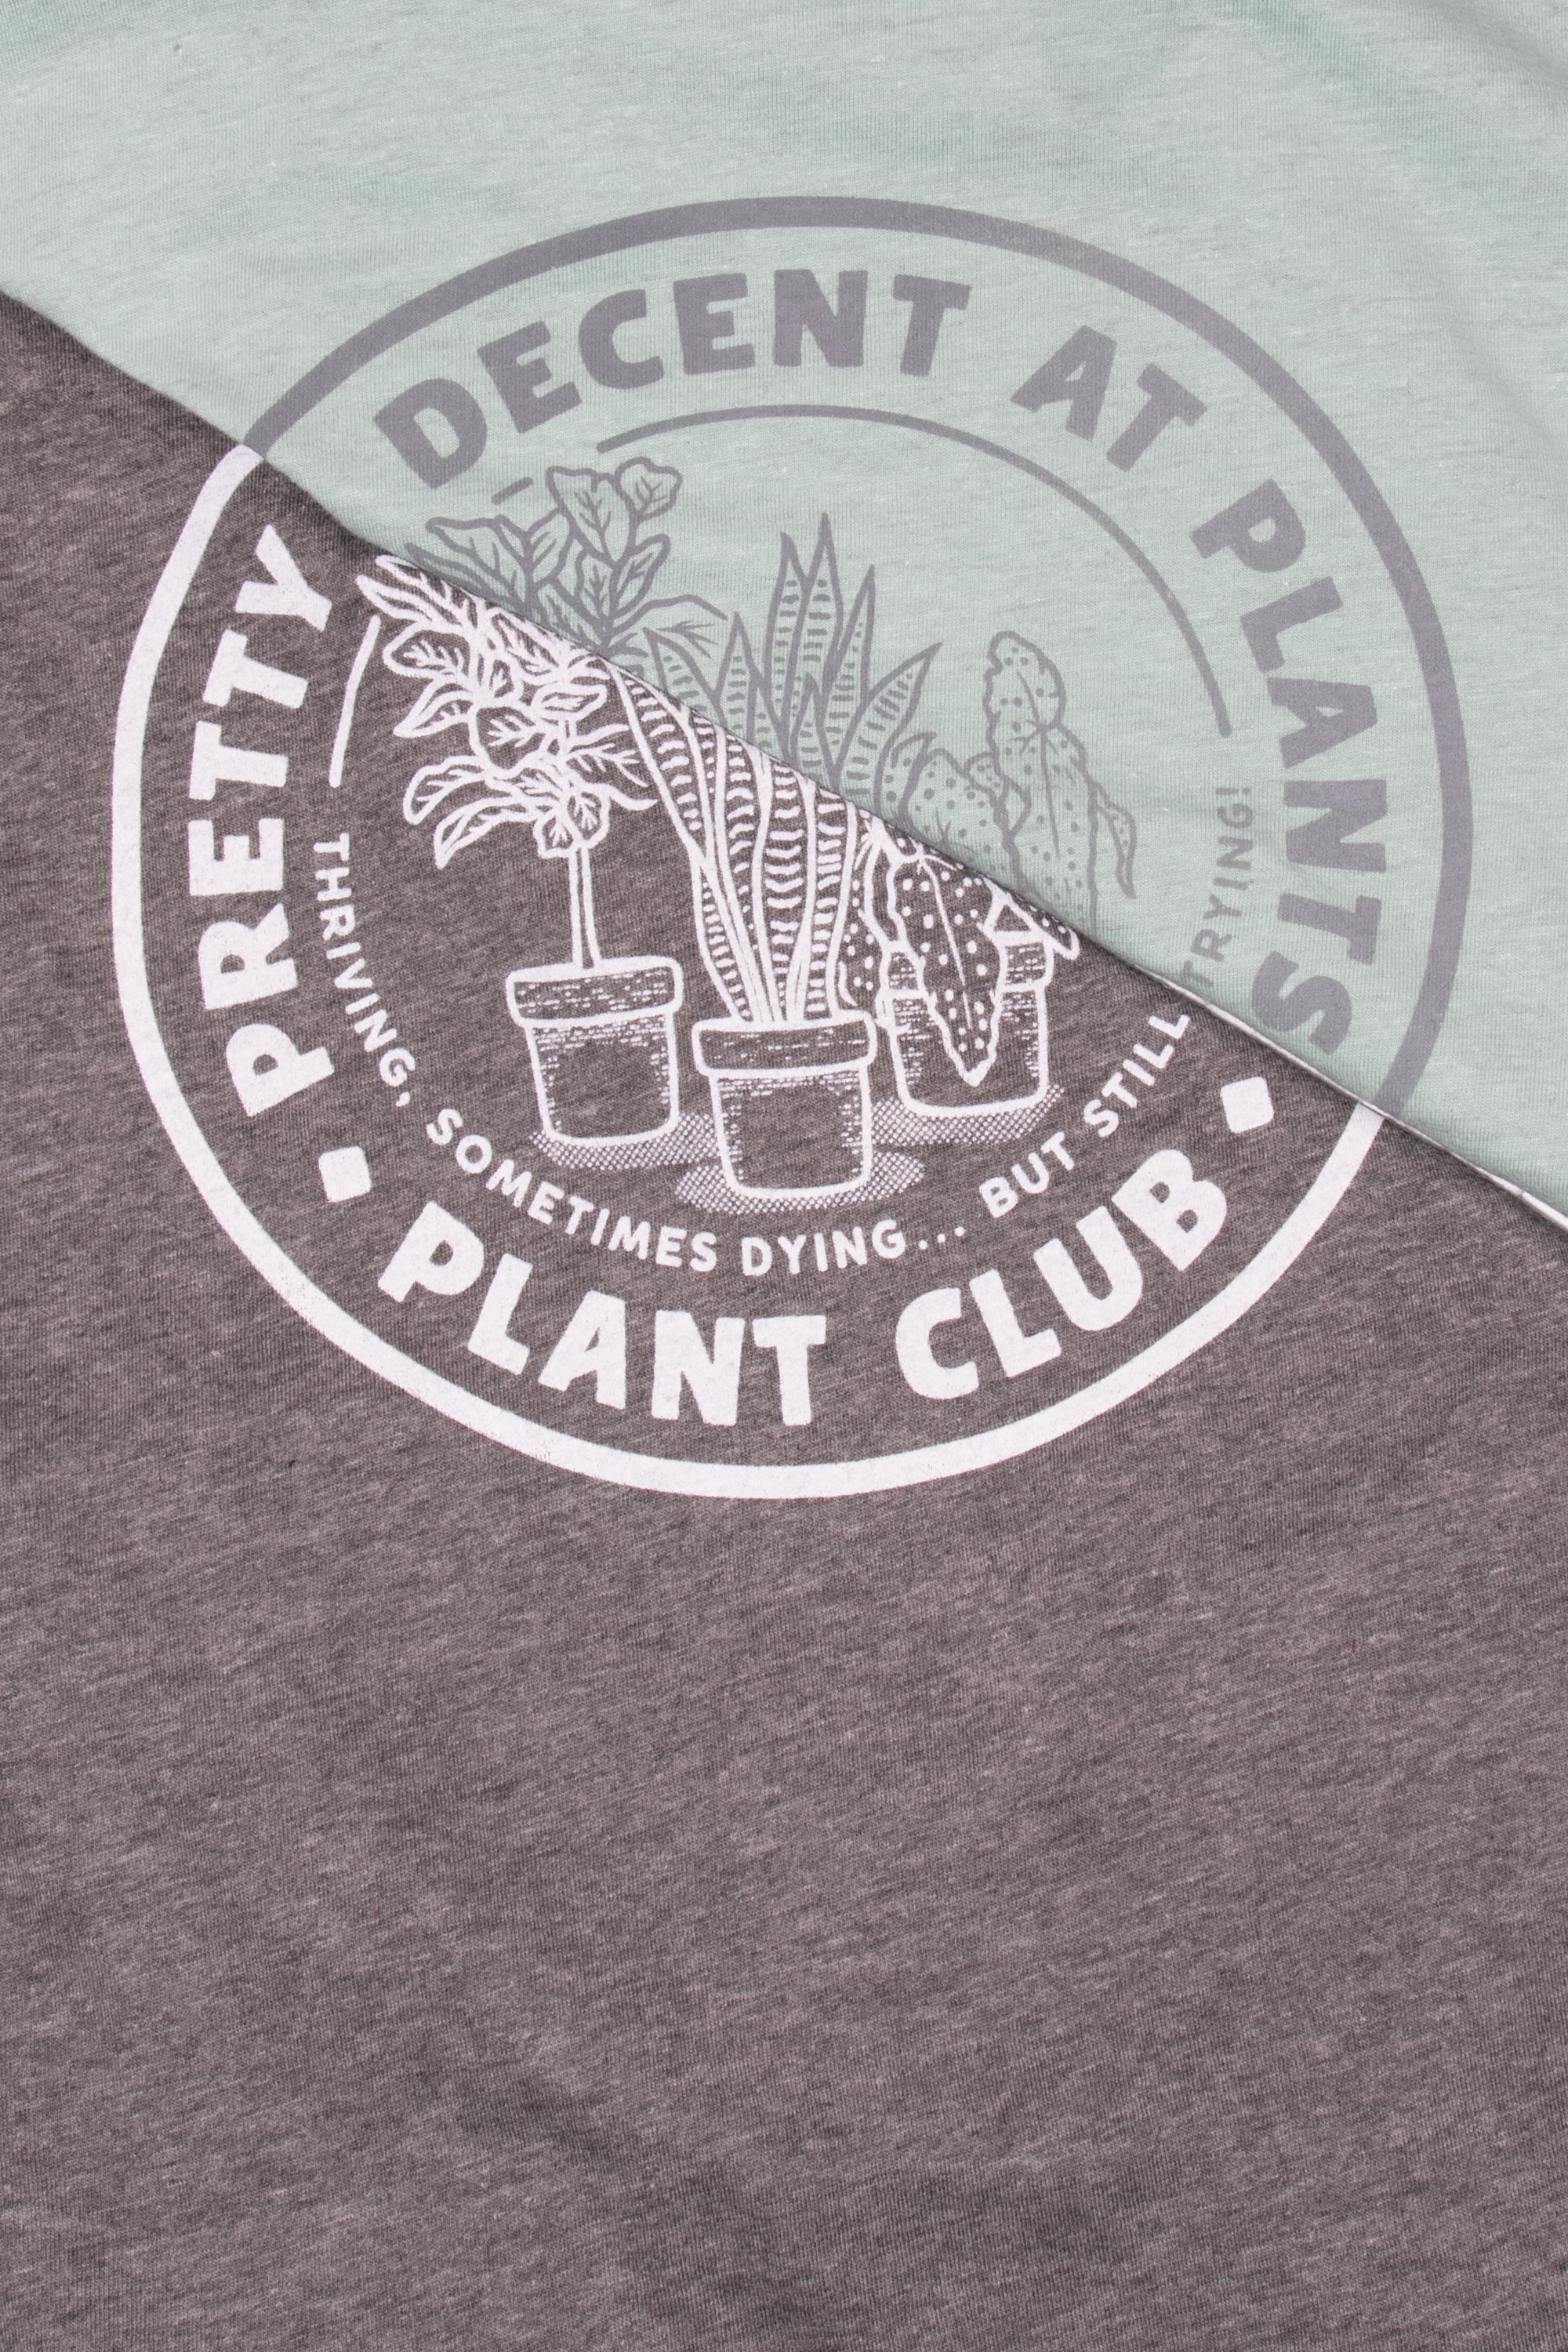 Pretty Decent at Plants Plant Club - Unisex Tee - Dark Heather Gray